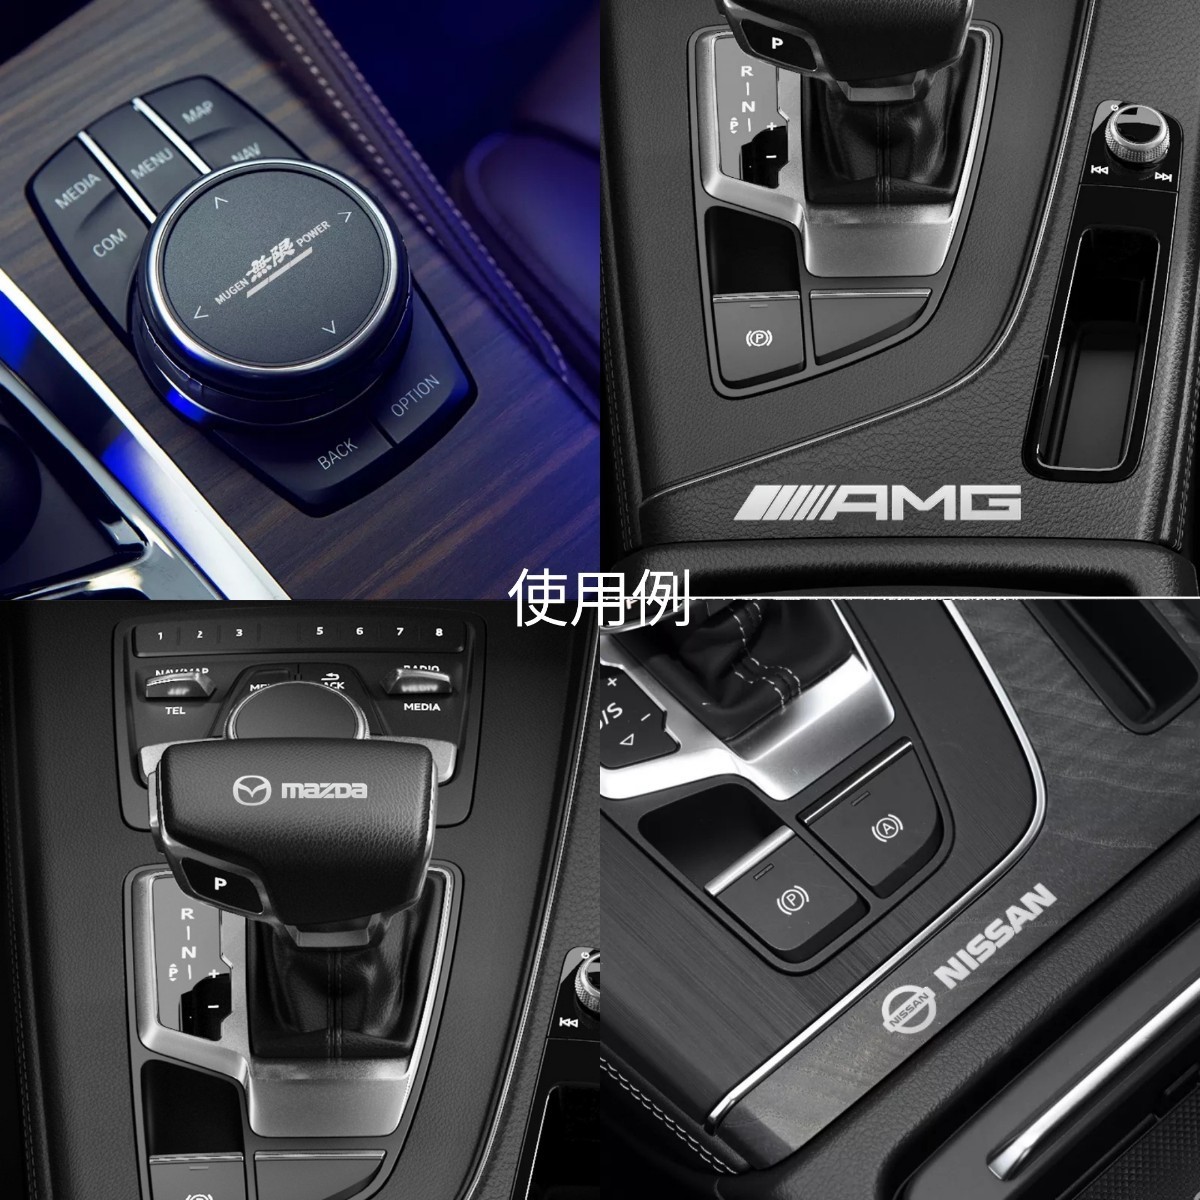  Mercedes * Benz металлизированный style стикер 2P#Mercedes-benz Class ABCGEVSL0123456789 AMG Wagon gelaende # в машине мелкие вещи смартфон планшет 